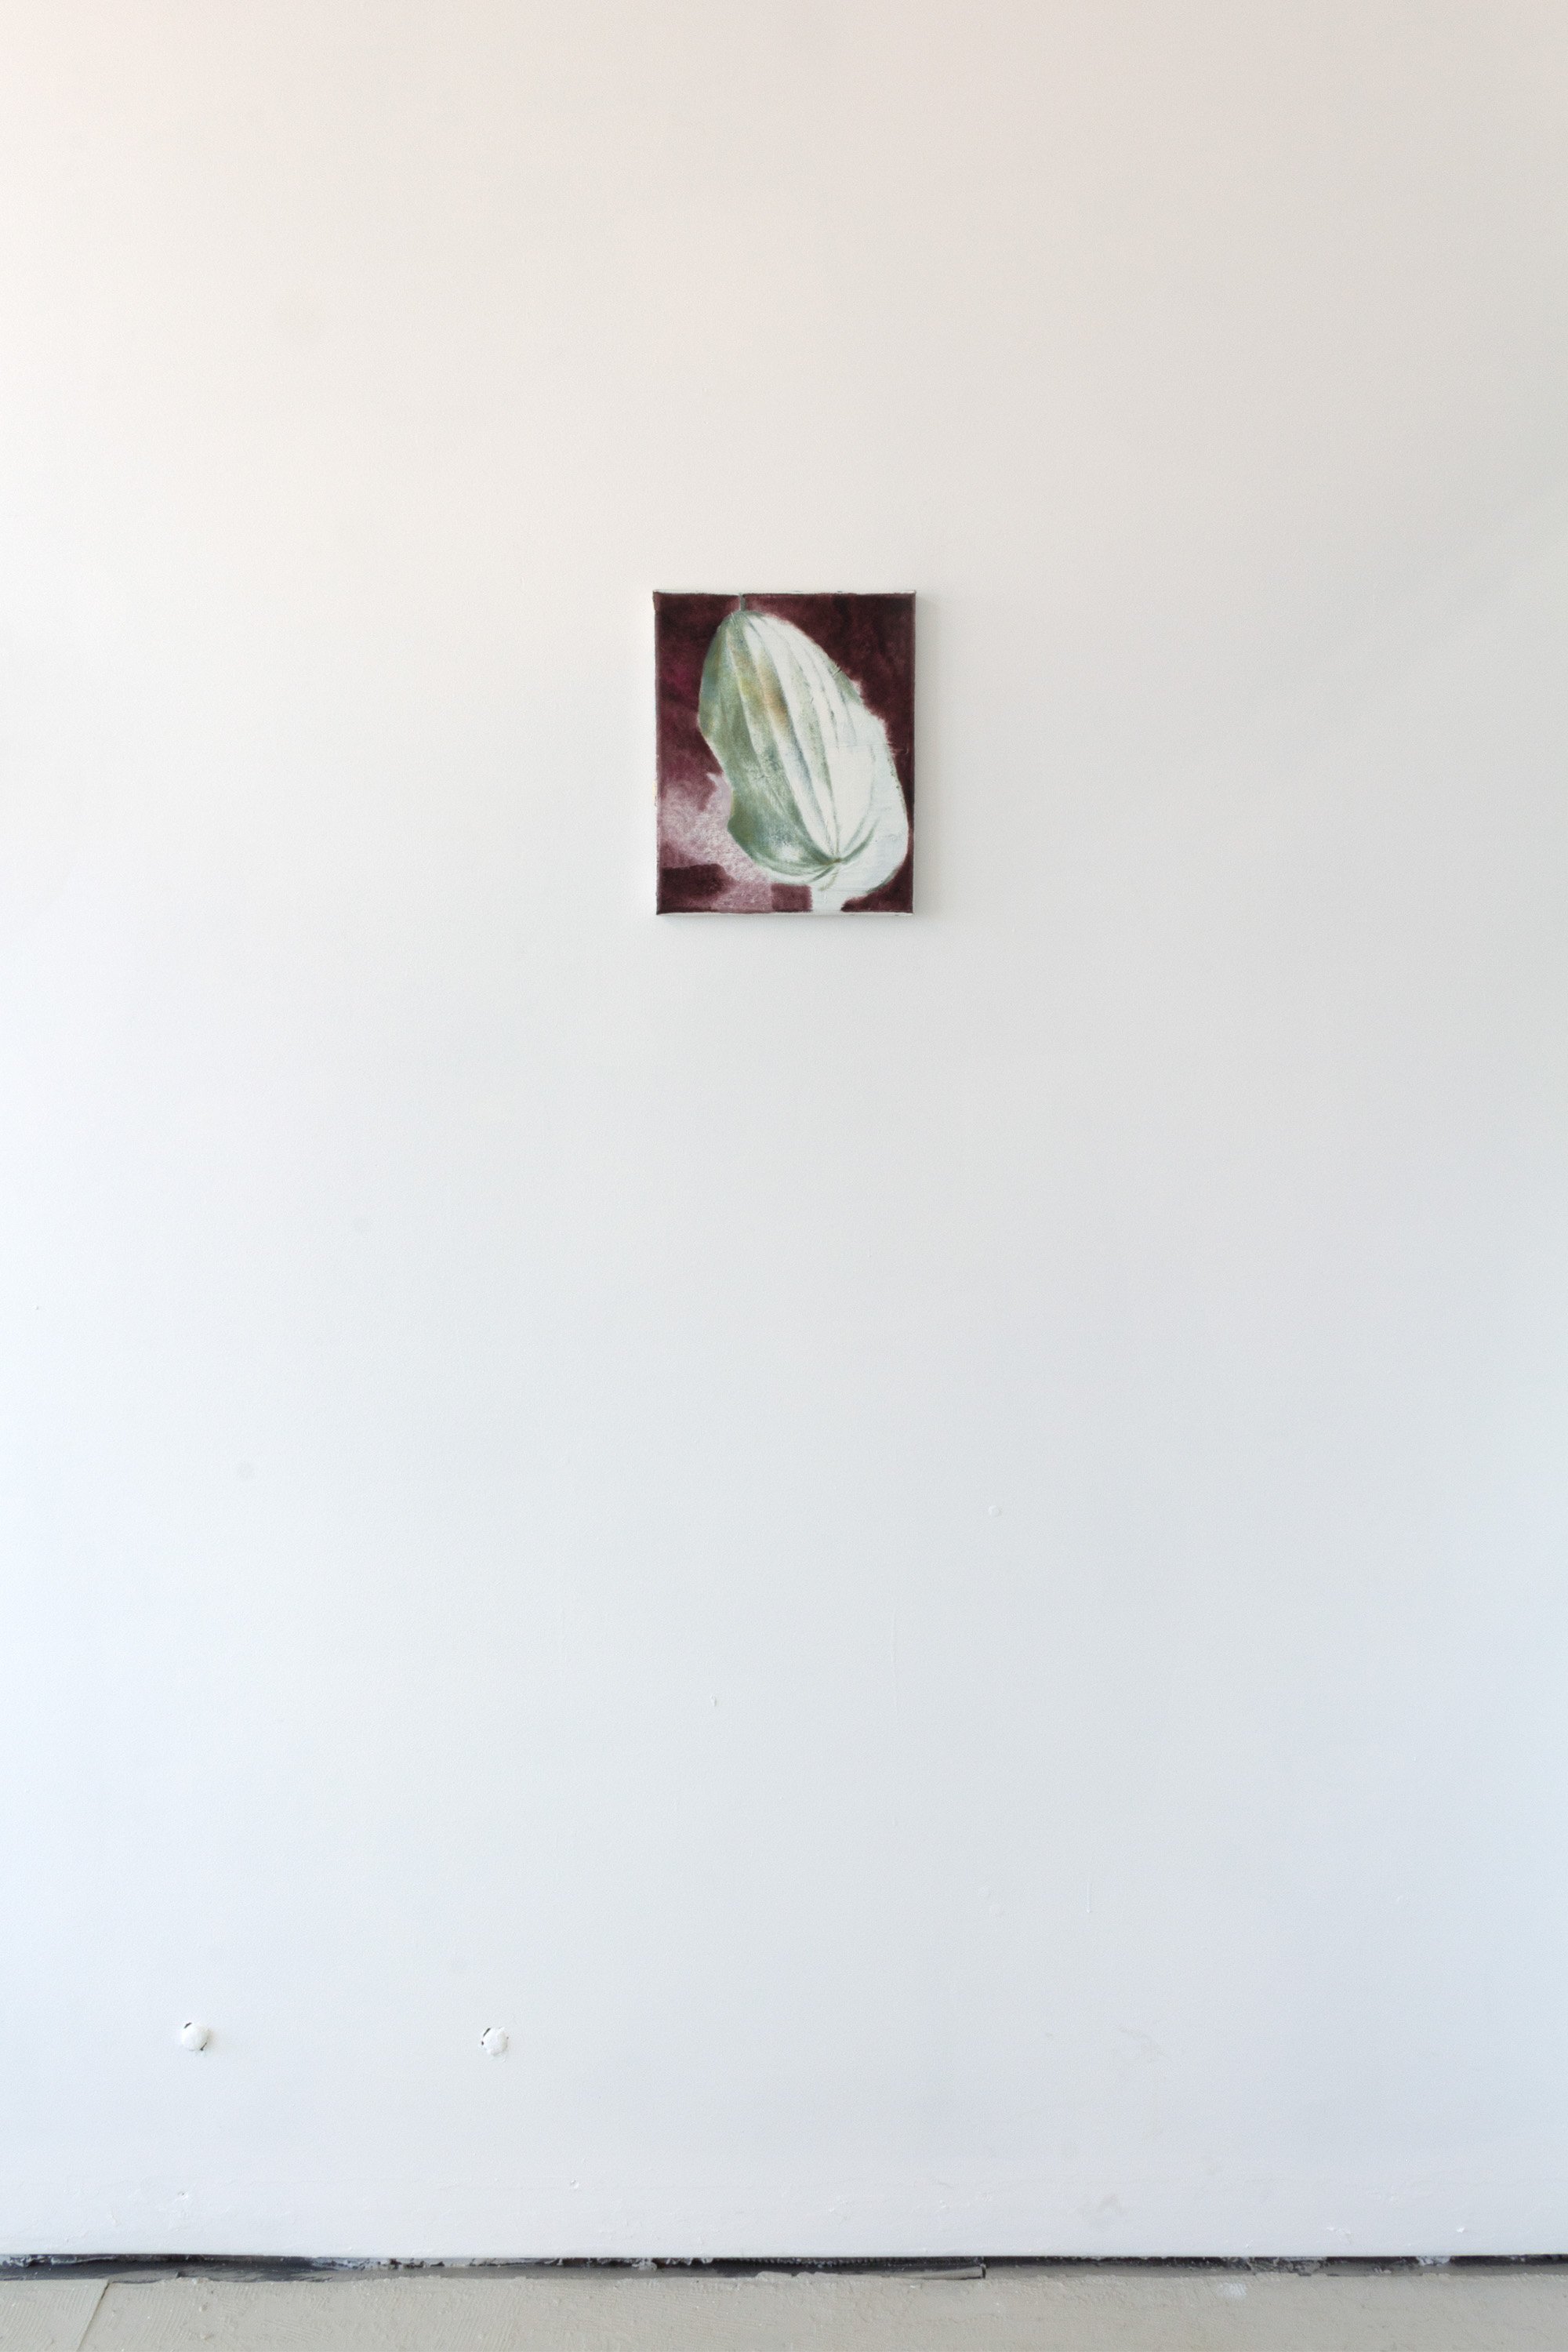  Shiwen Wang  Untitled , 2021  Oil on canvas  9.5 x 12 in 